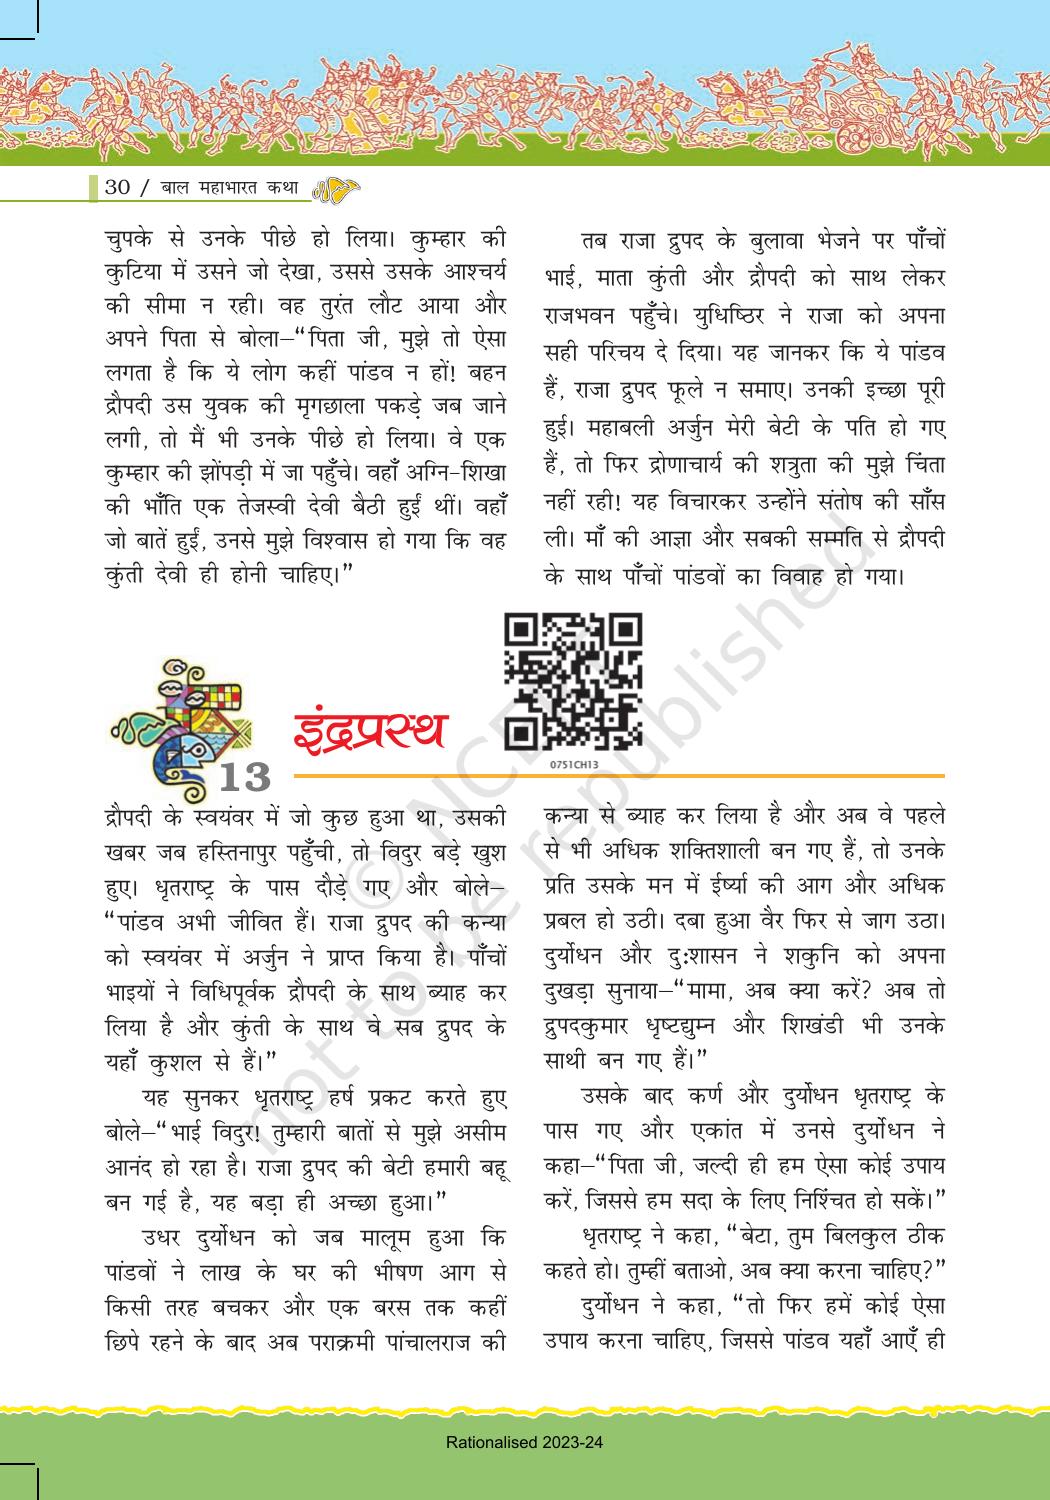 NCERT Book for Class 7 Hindi: Chapter 1-बाल महाभारत कथा - Page 30